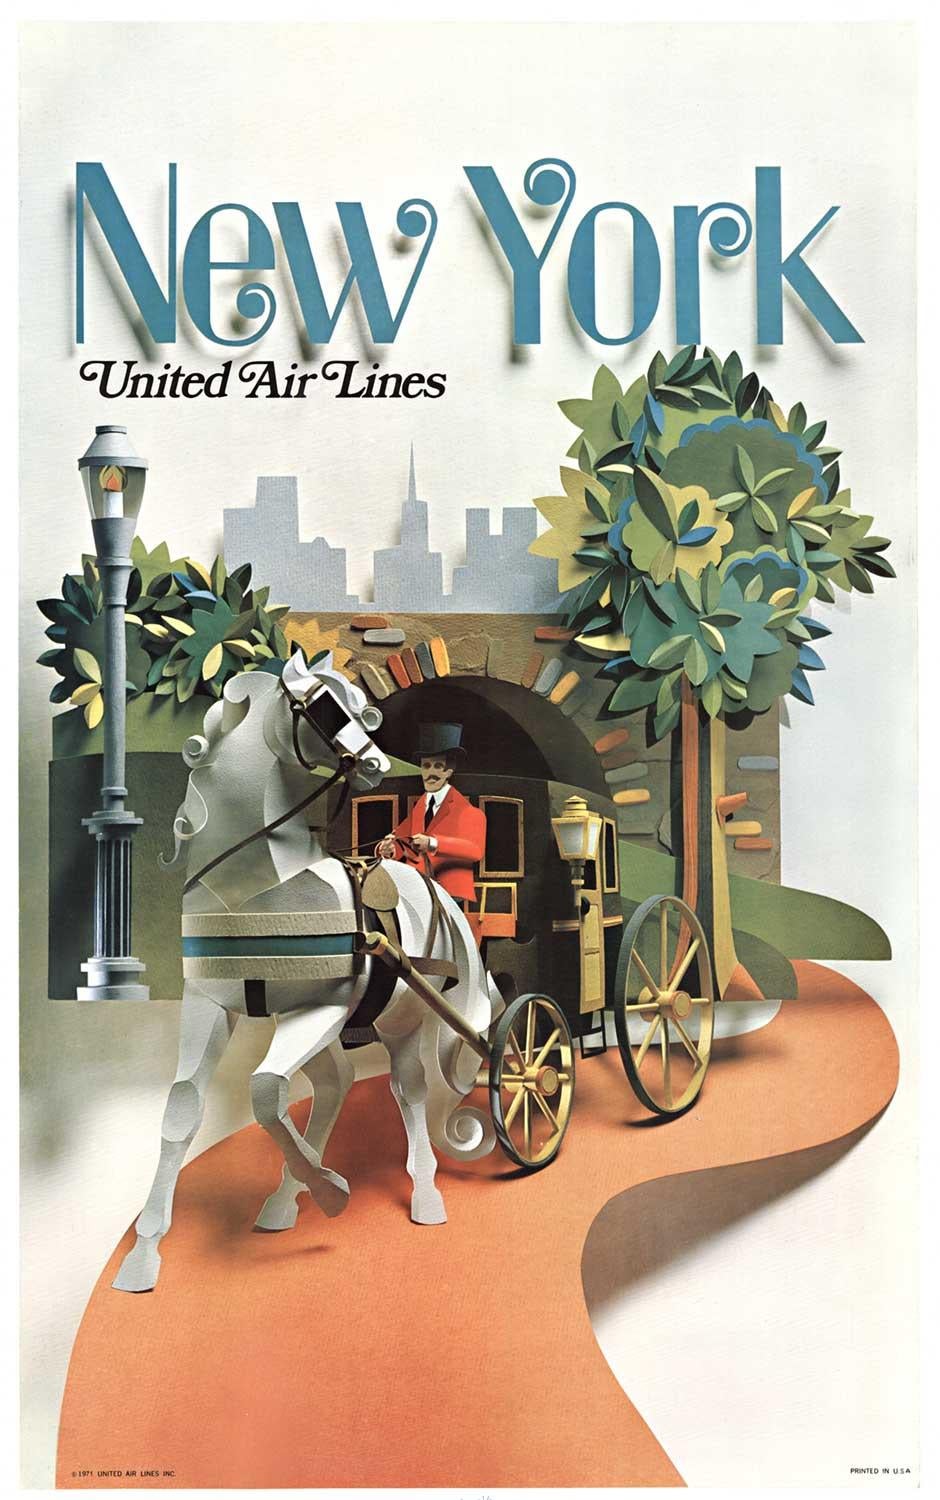 Unknown Landscape Print - Original "New York United Airlines" vintage travel poster  Central Park